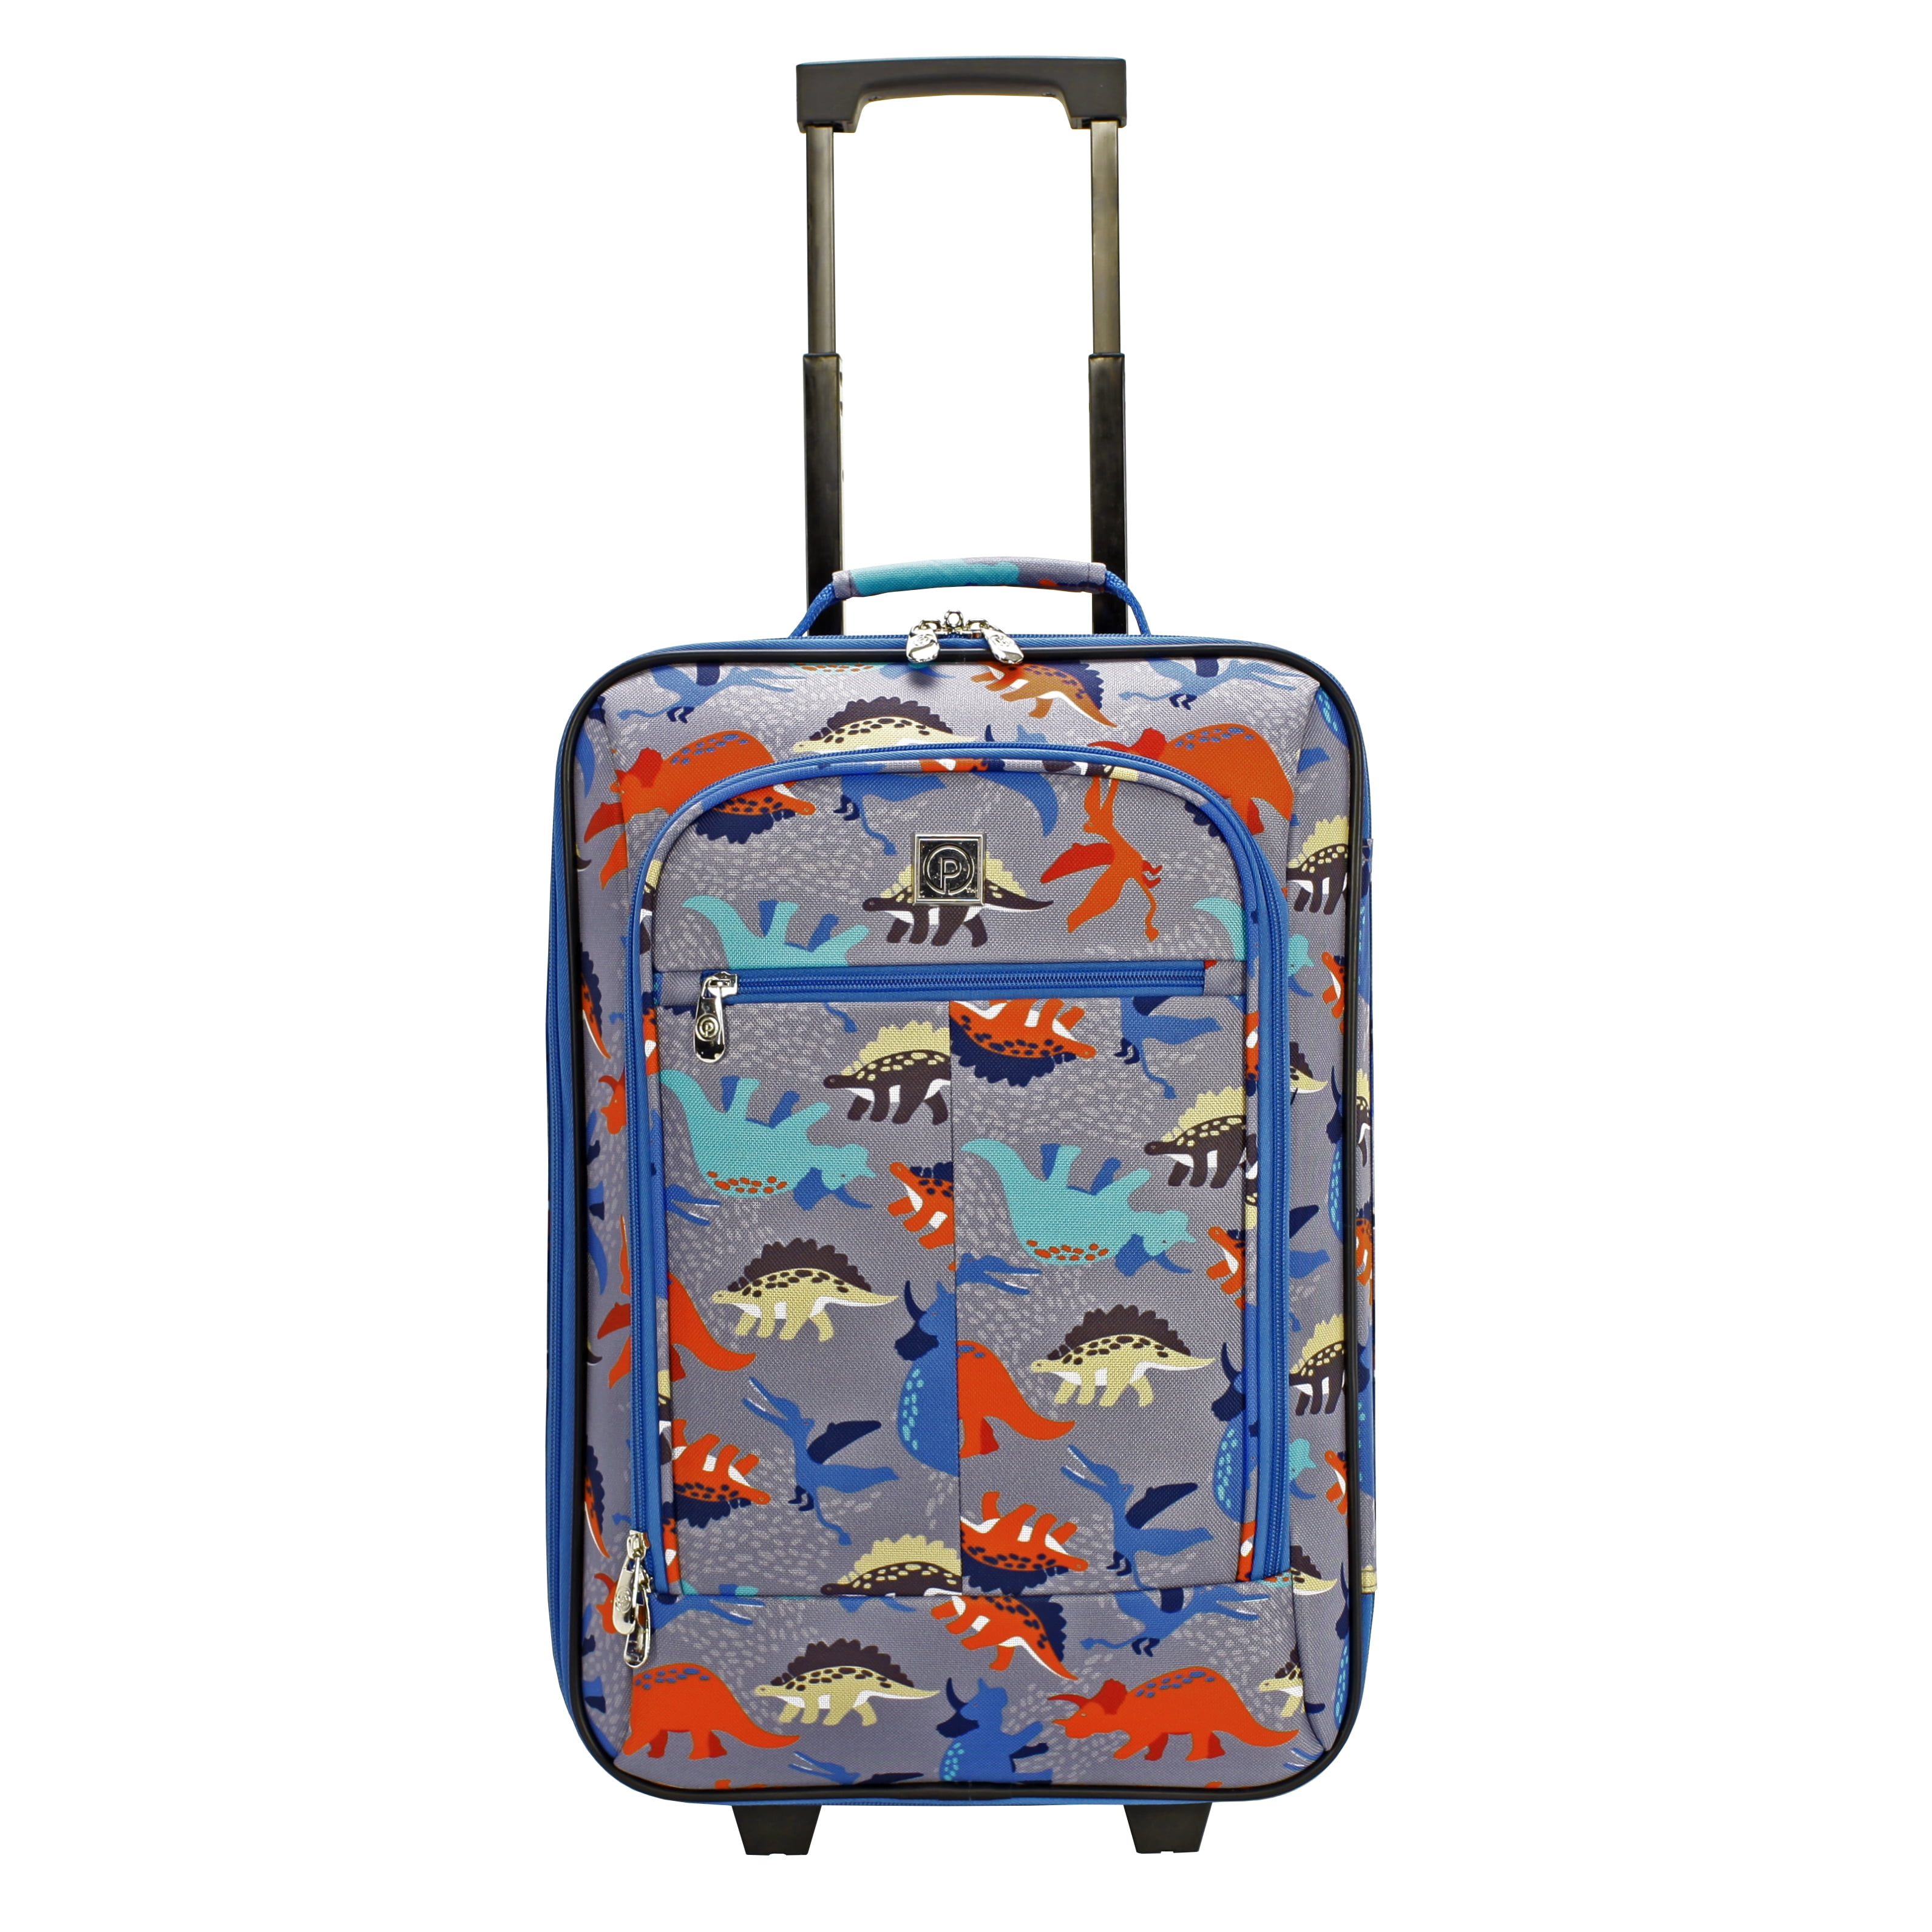 Protege 18 Kids Pilot Case Carry-on Luggage Suitcase, Unicorn